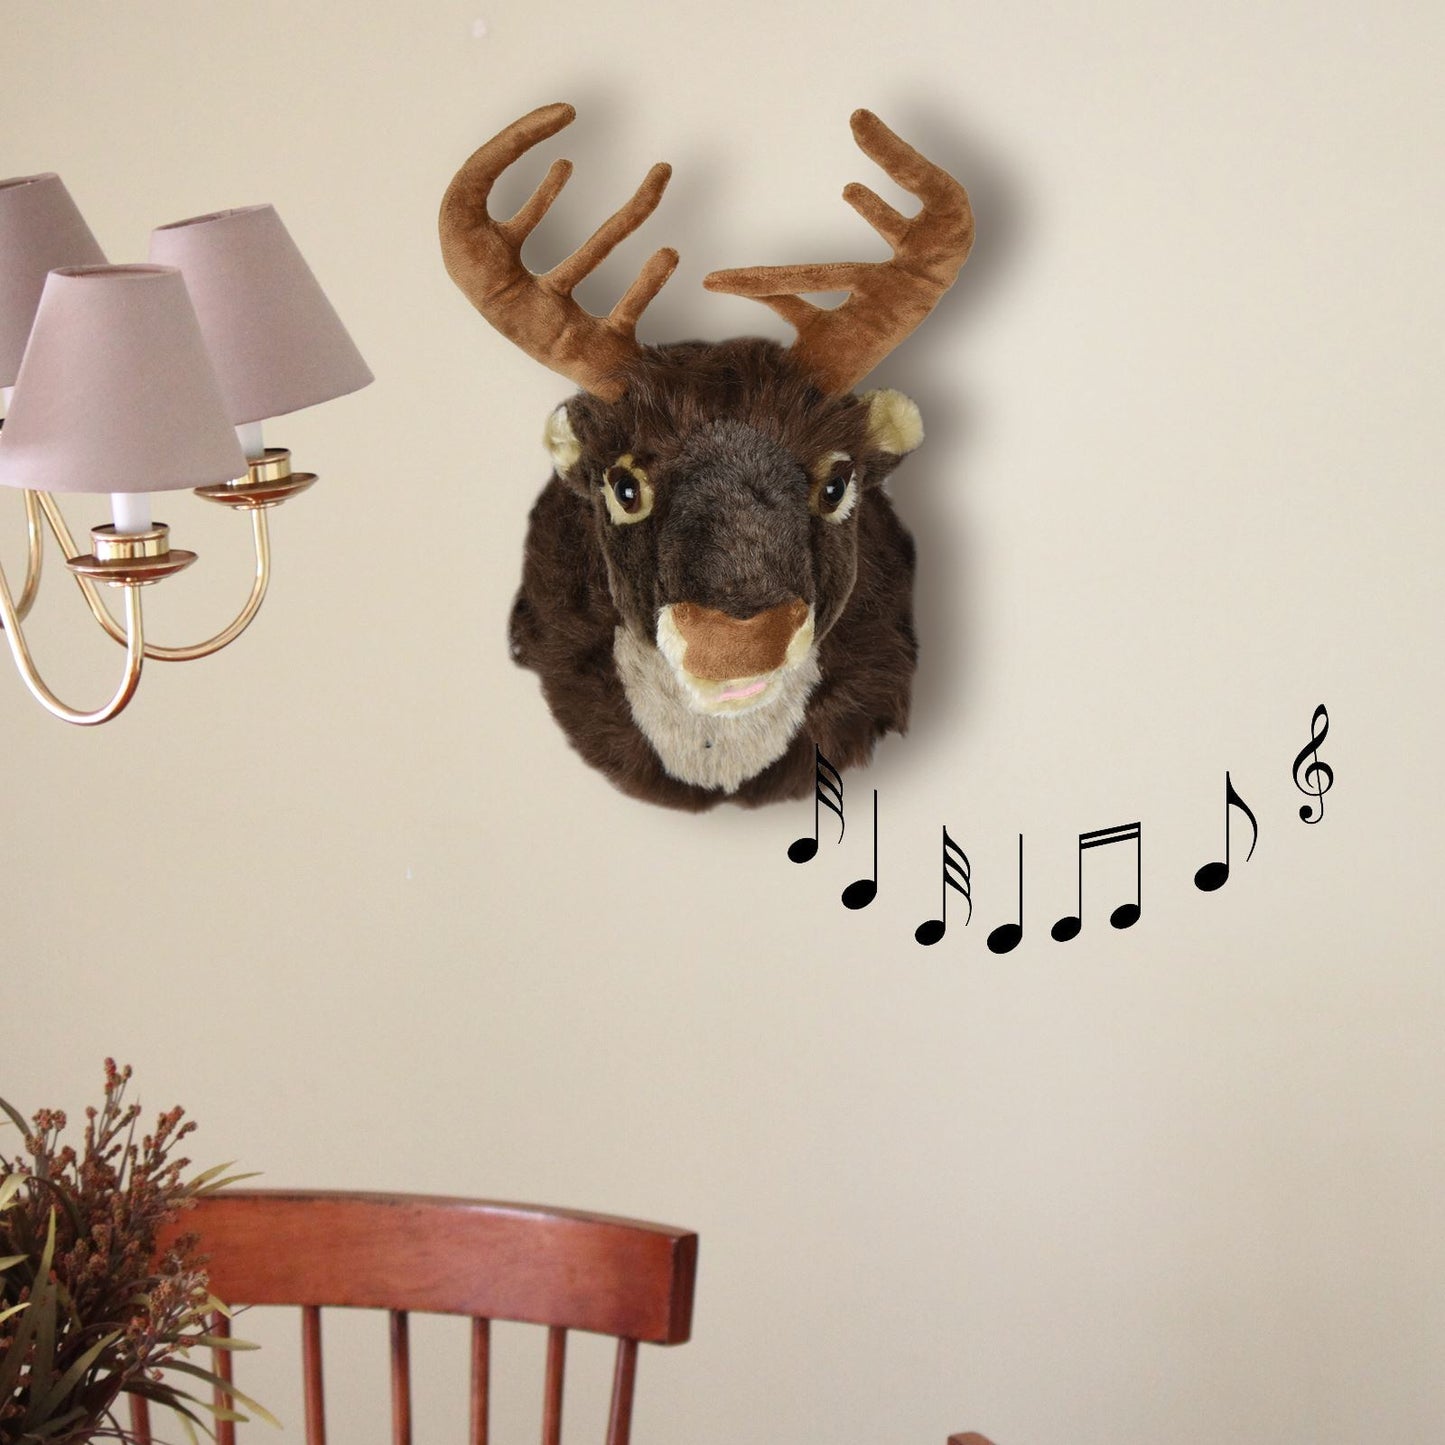 Musical Christmas Decoration Wall-Mounted Singing Reindeer Festive Wall Art